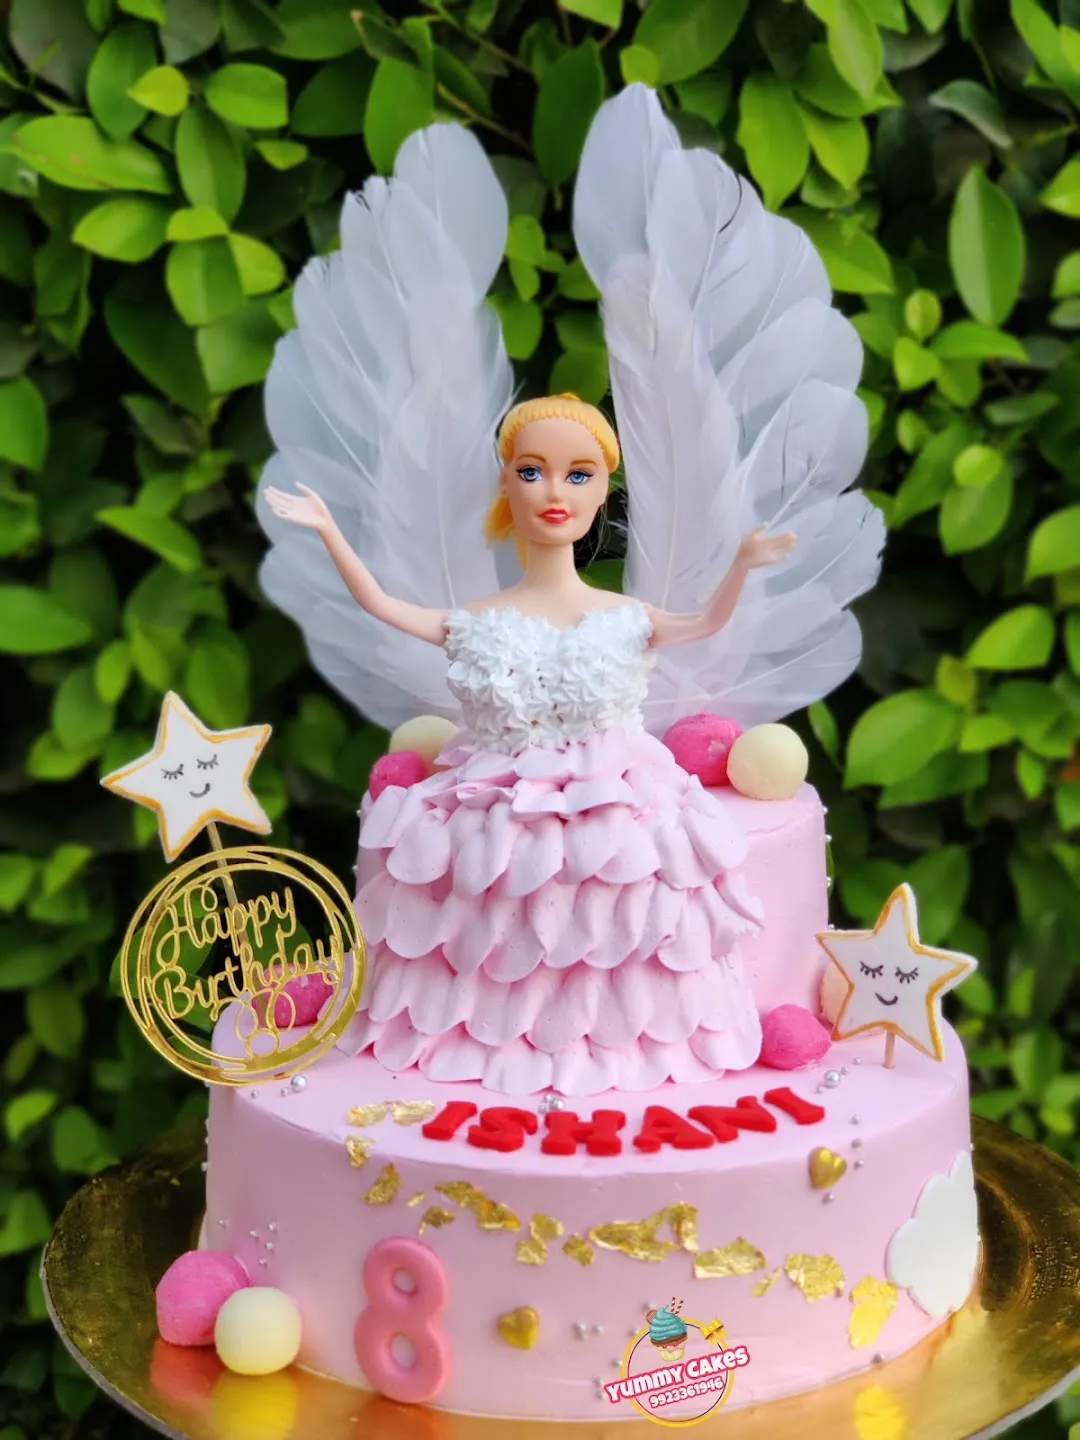 So Yummy Chocolate Birthday Cake | Cake Style 2021 | Best Tasty Cake  Decorating Ideas - YouTube | Birthday cake chocolate, Fashion cakes, Cake  decorating